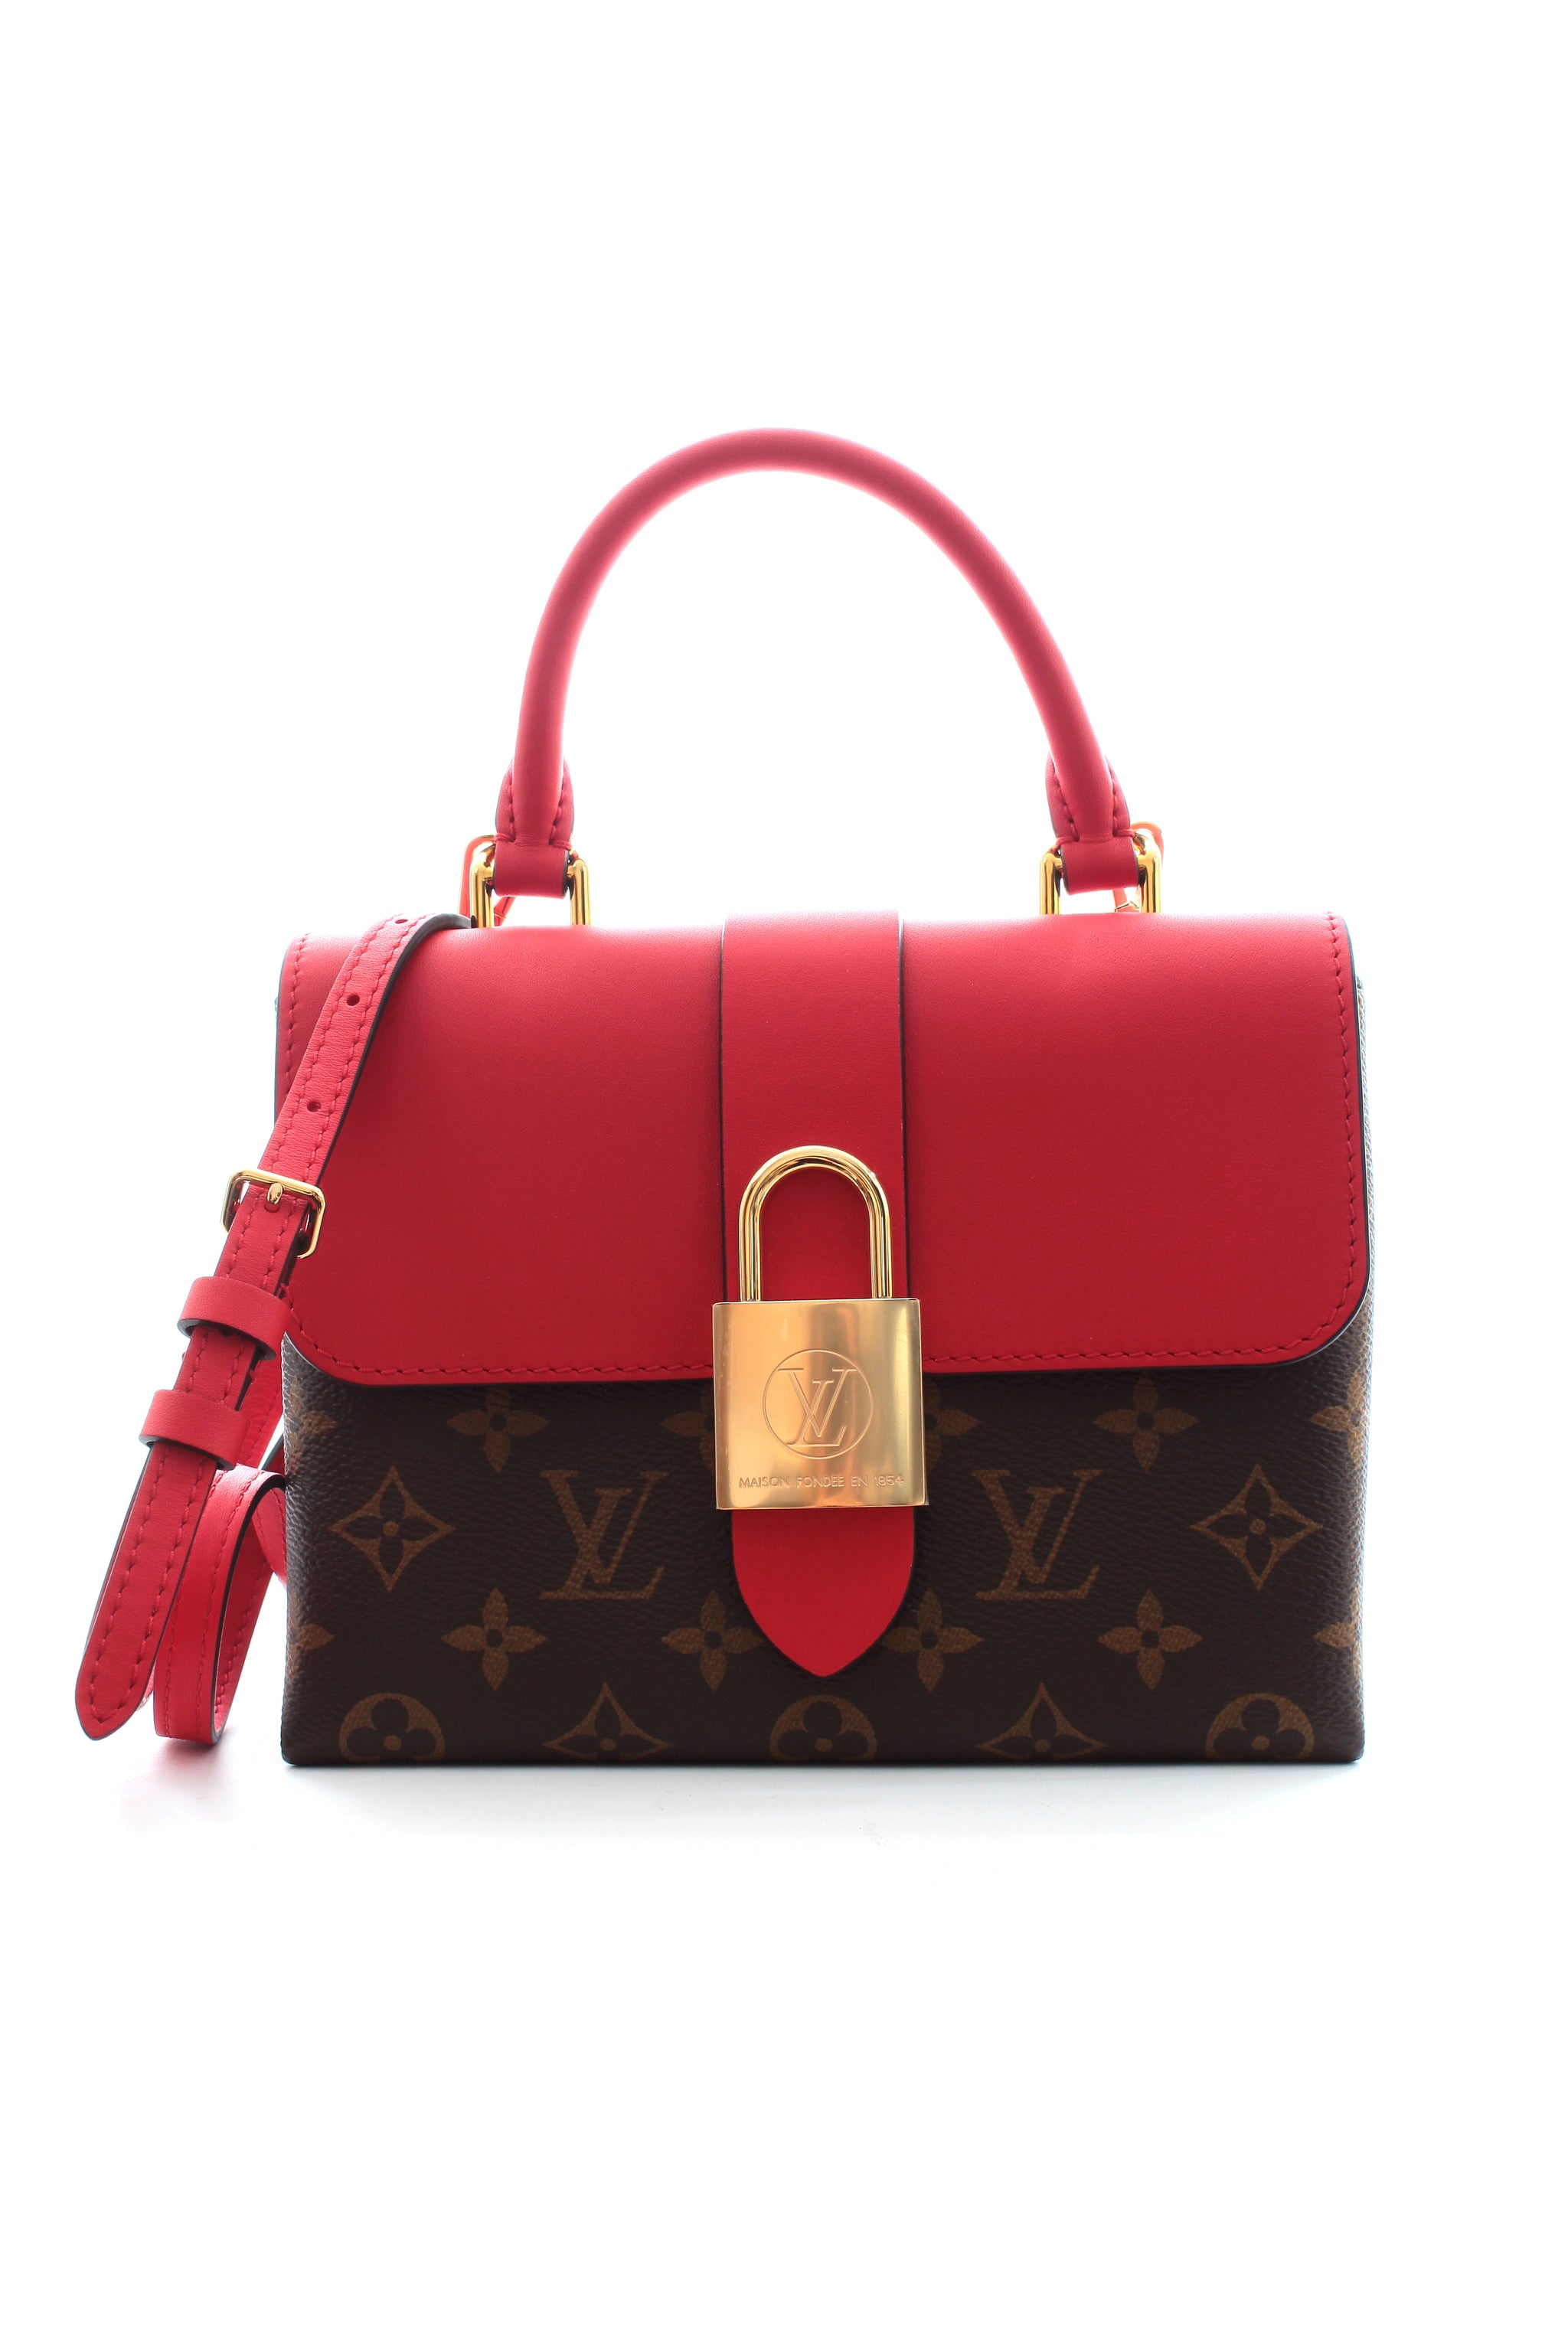 LOCKY Bb Handbag, Red, One Size